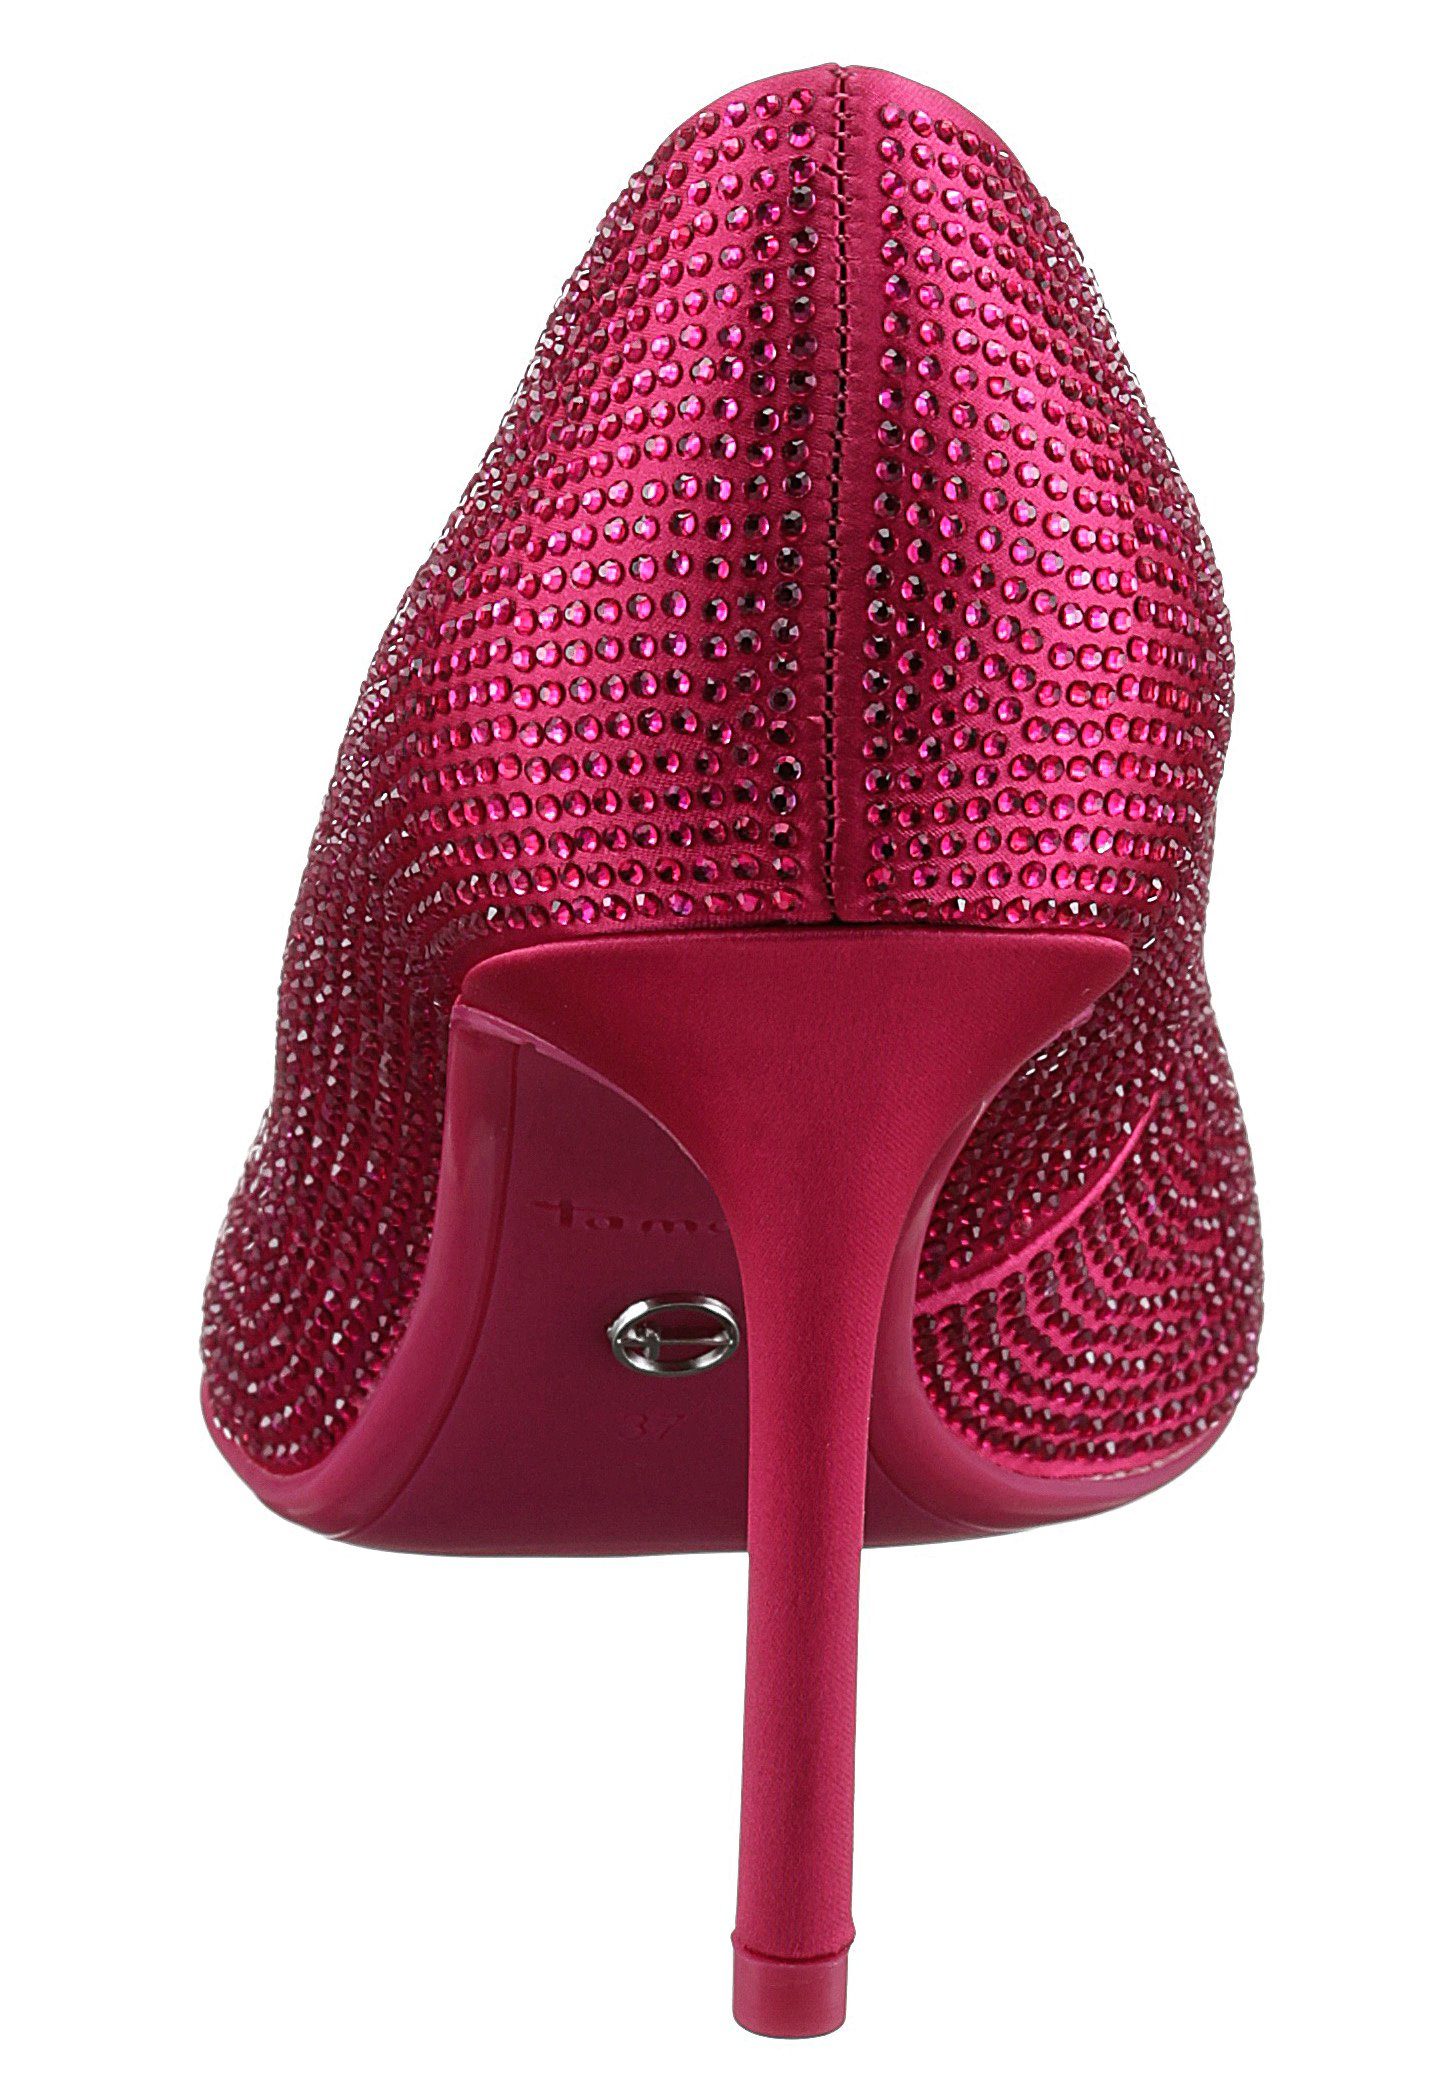 Tamaris pink High-Heel-Pumps eleganter in spitzer Form